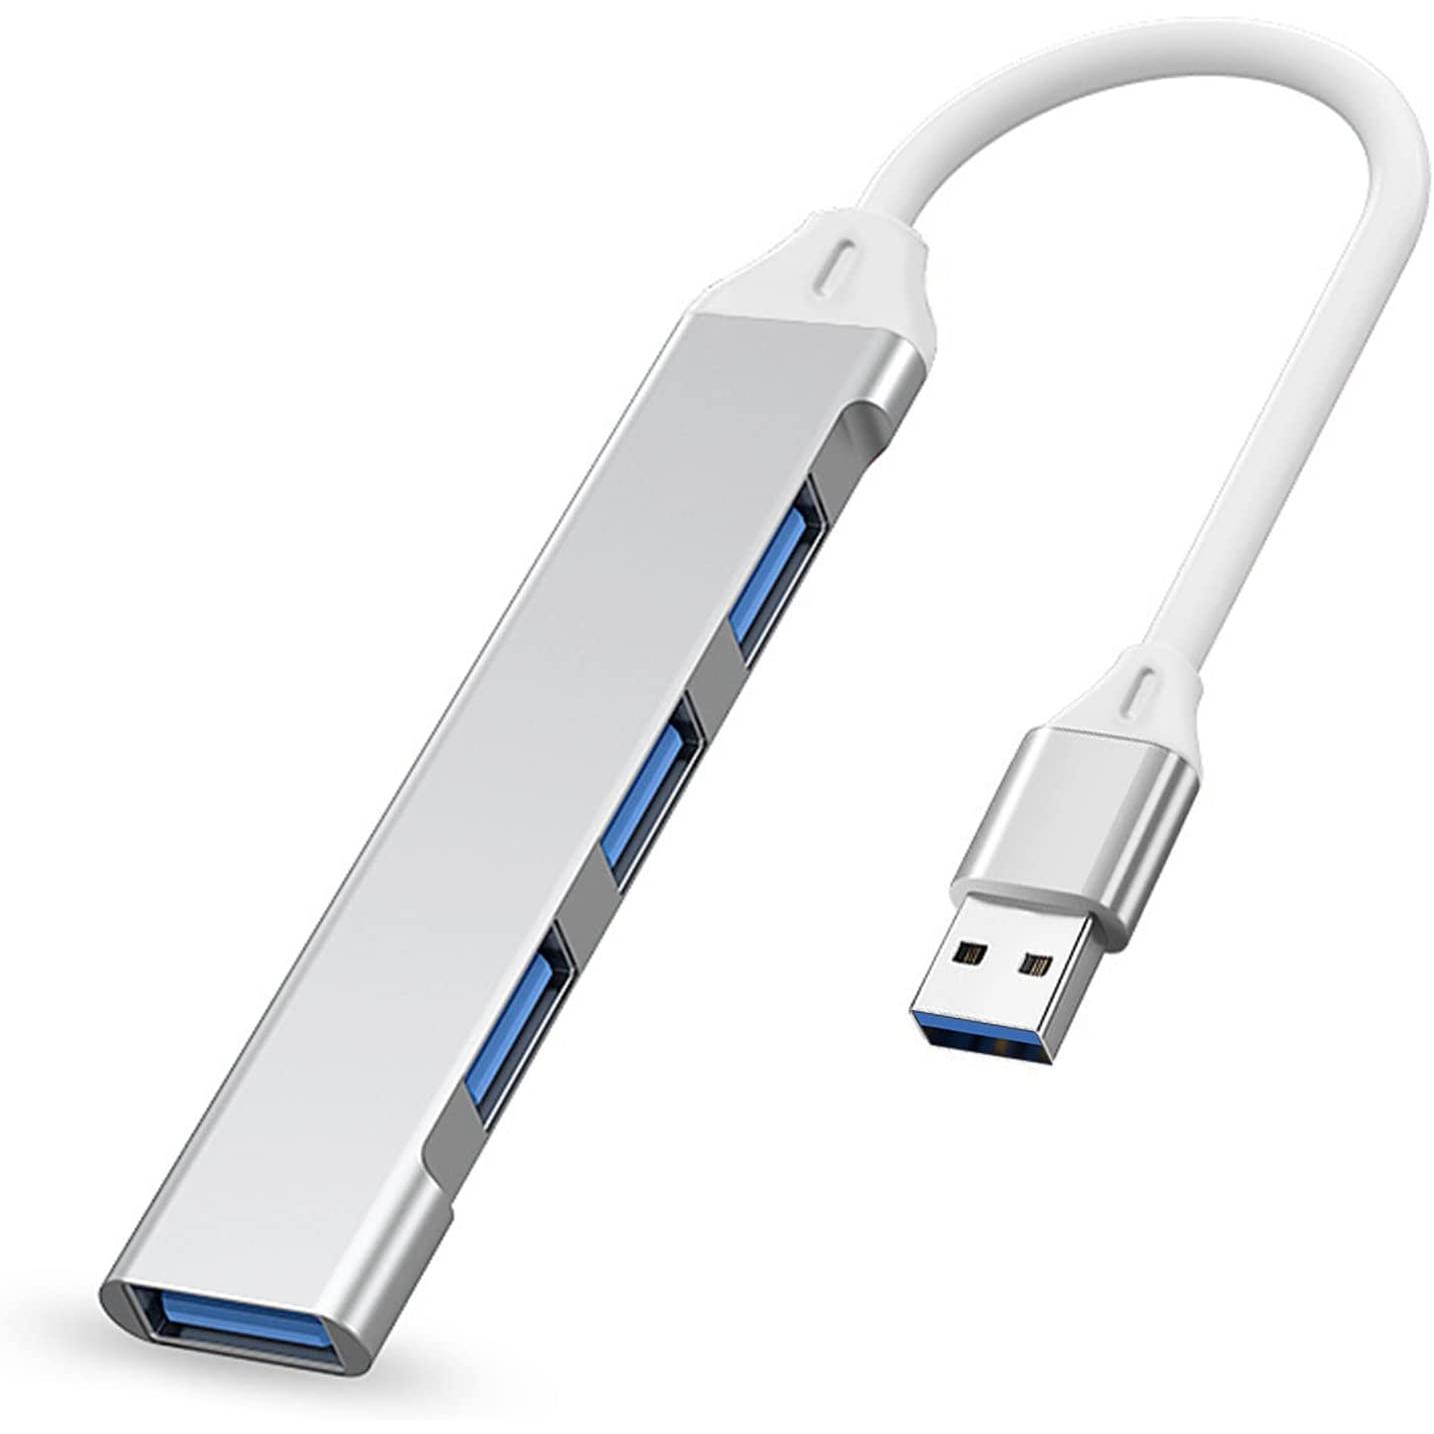 Ladron Hub USB 3.0 (5Gbps) 4 Puertos - Hubs USB-A